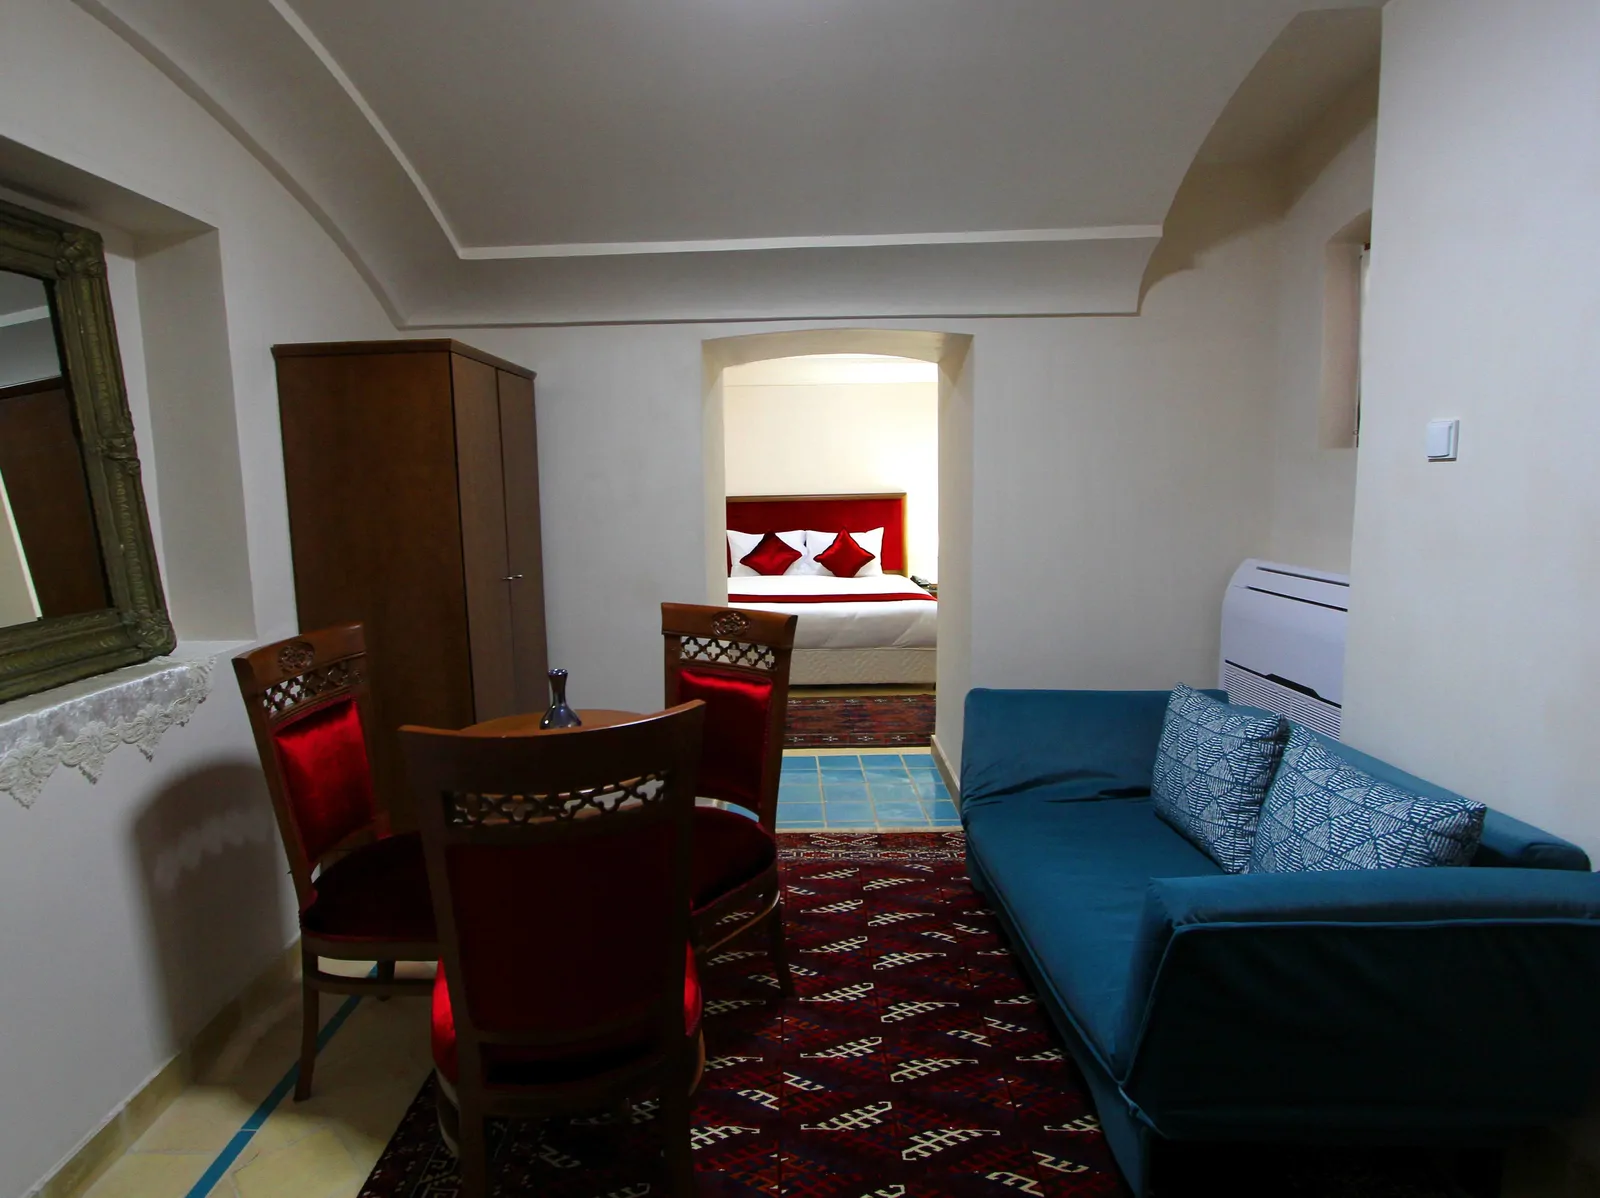 هتل سنتی عمارت ماندگار(117 _ دابل پلاس)